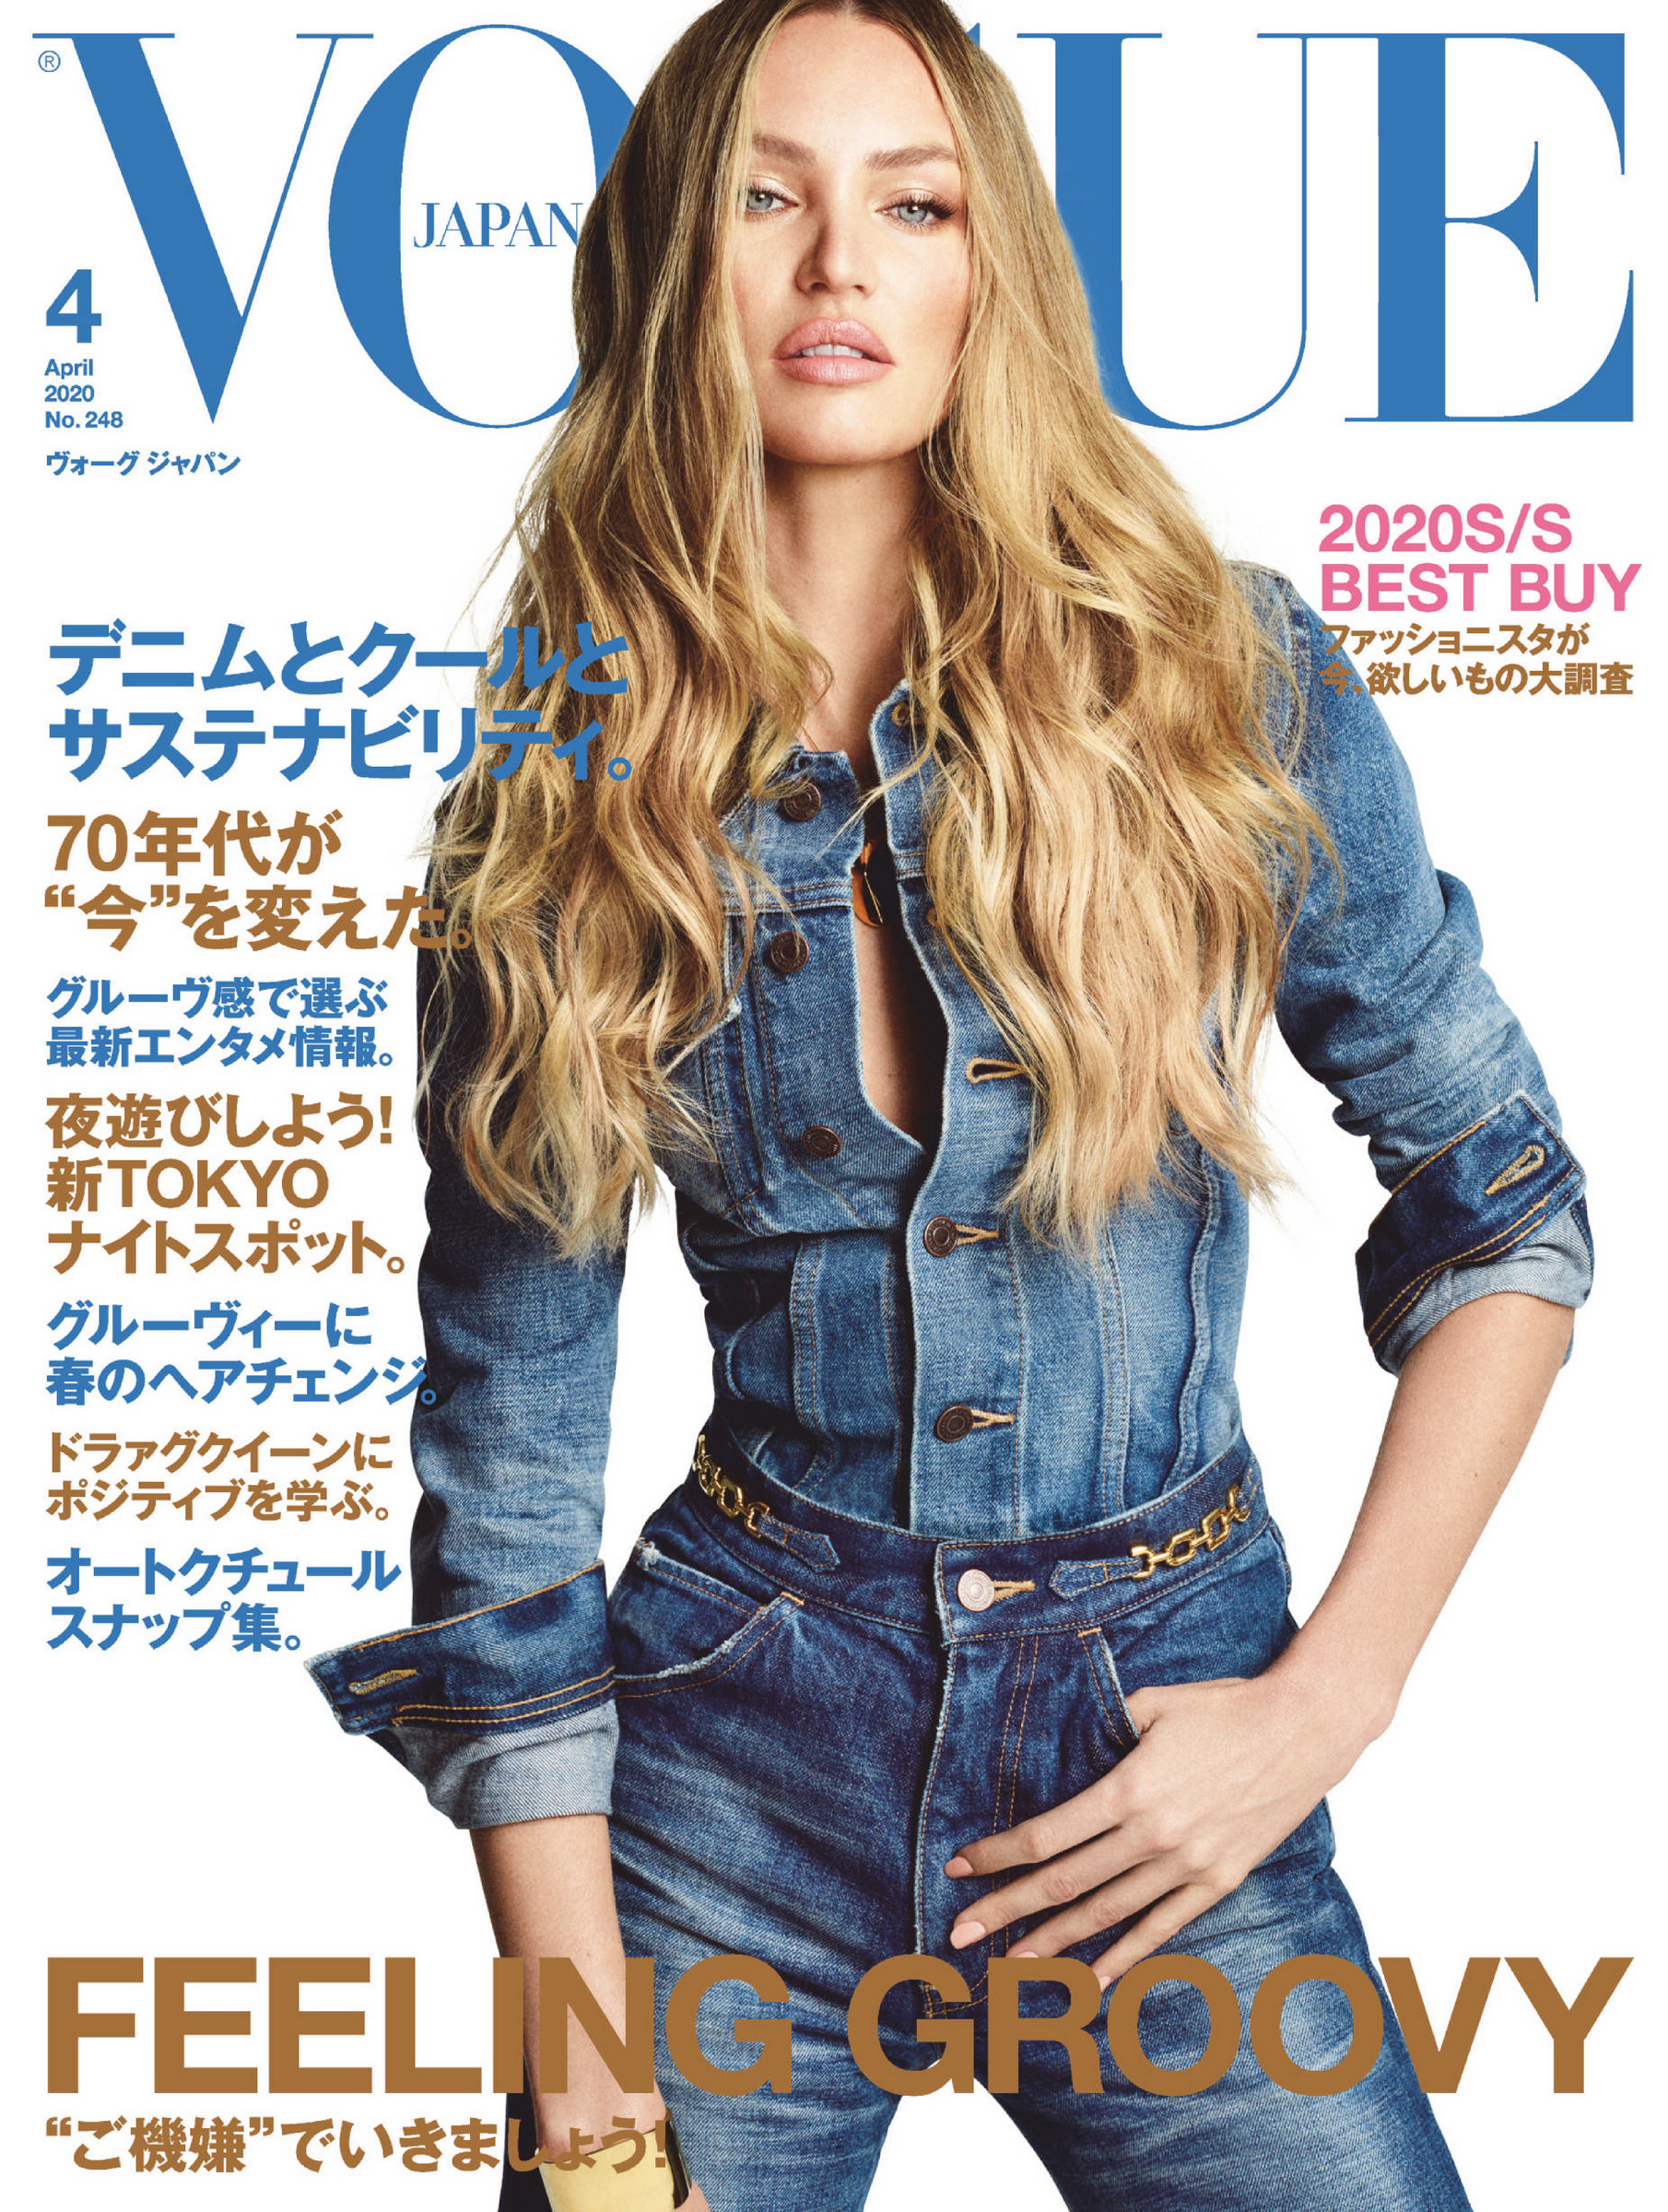 Fotos n°4 : Topless Modelos en Denim para Vogue Japn